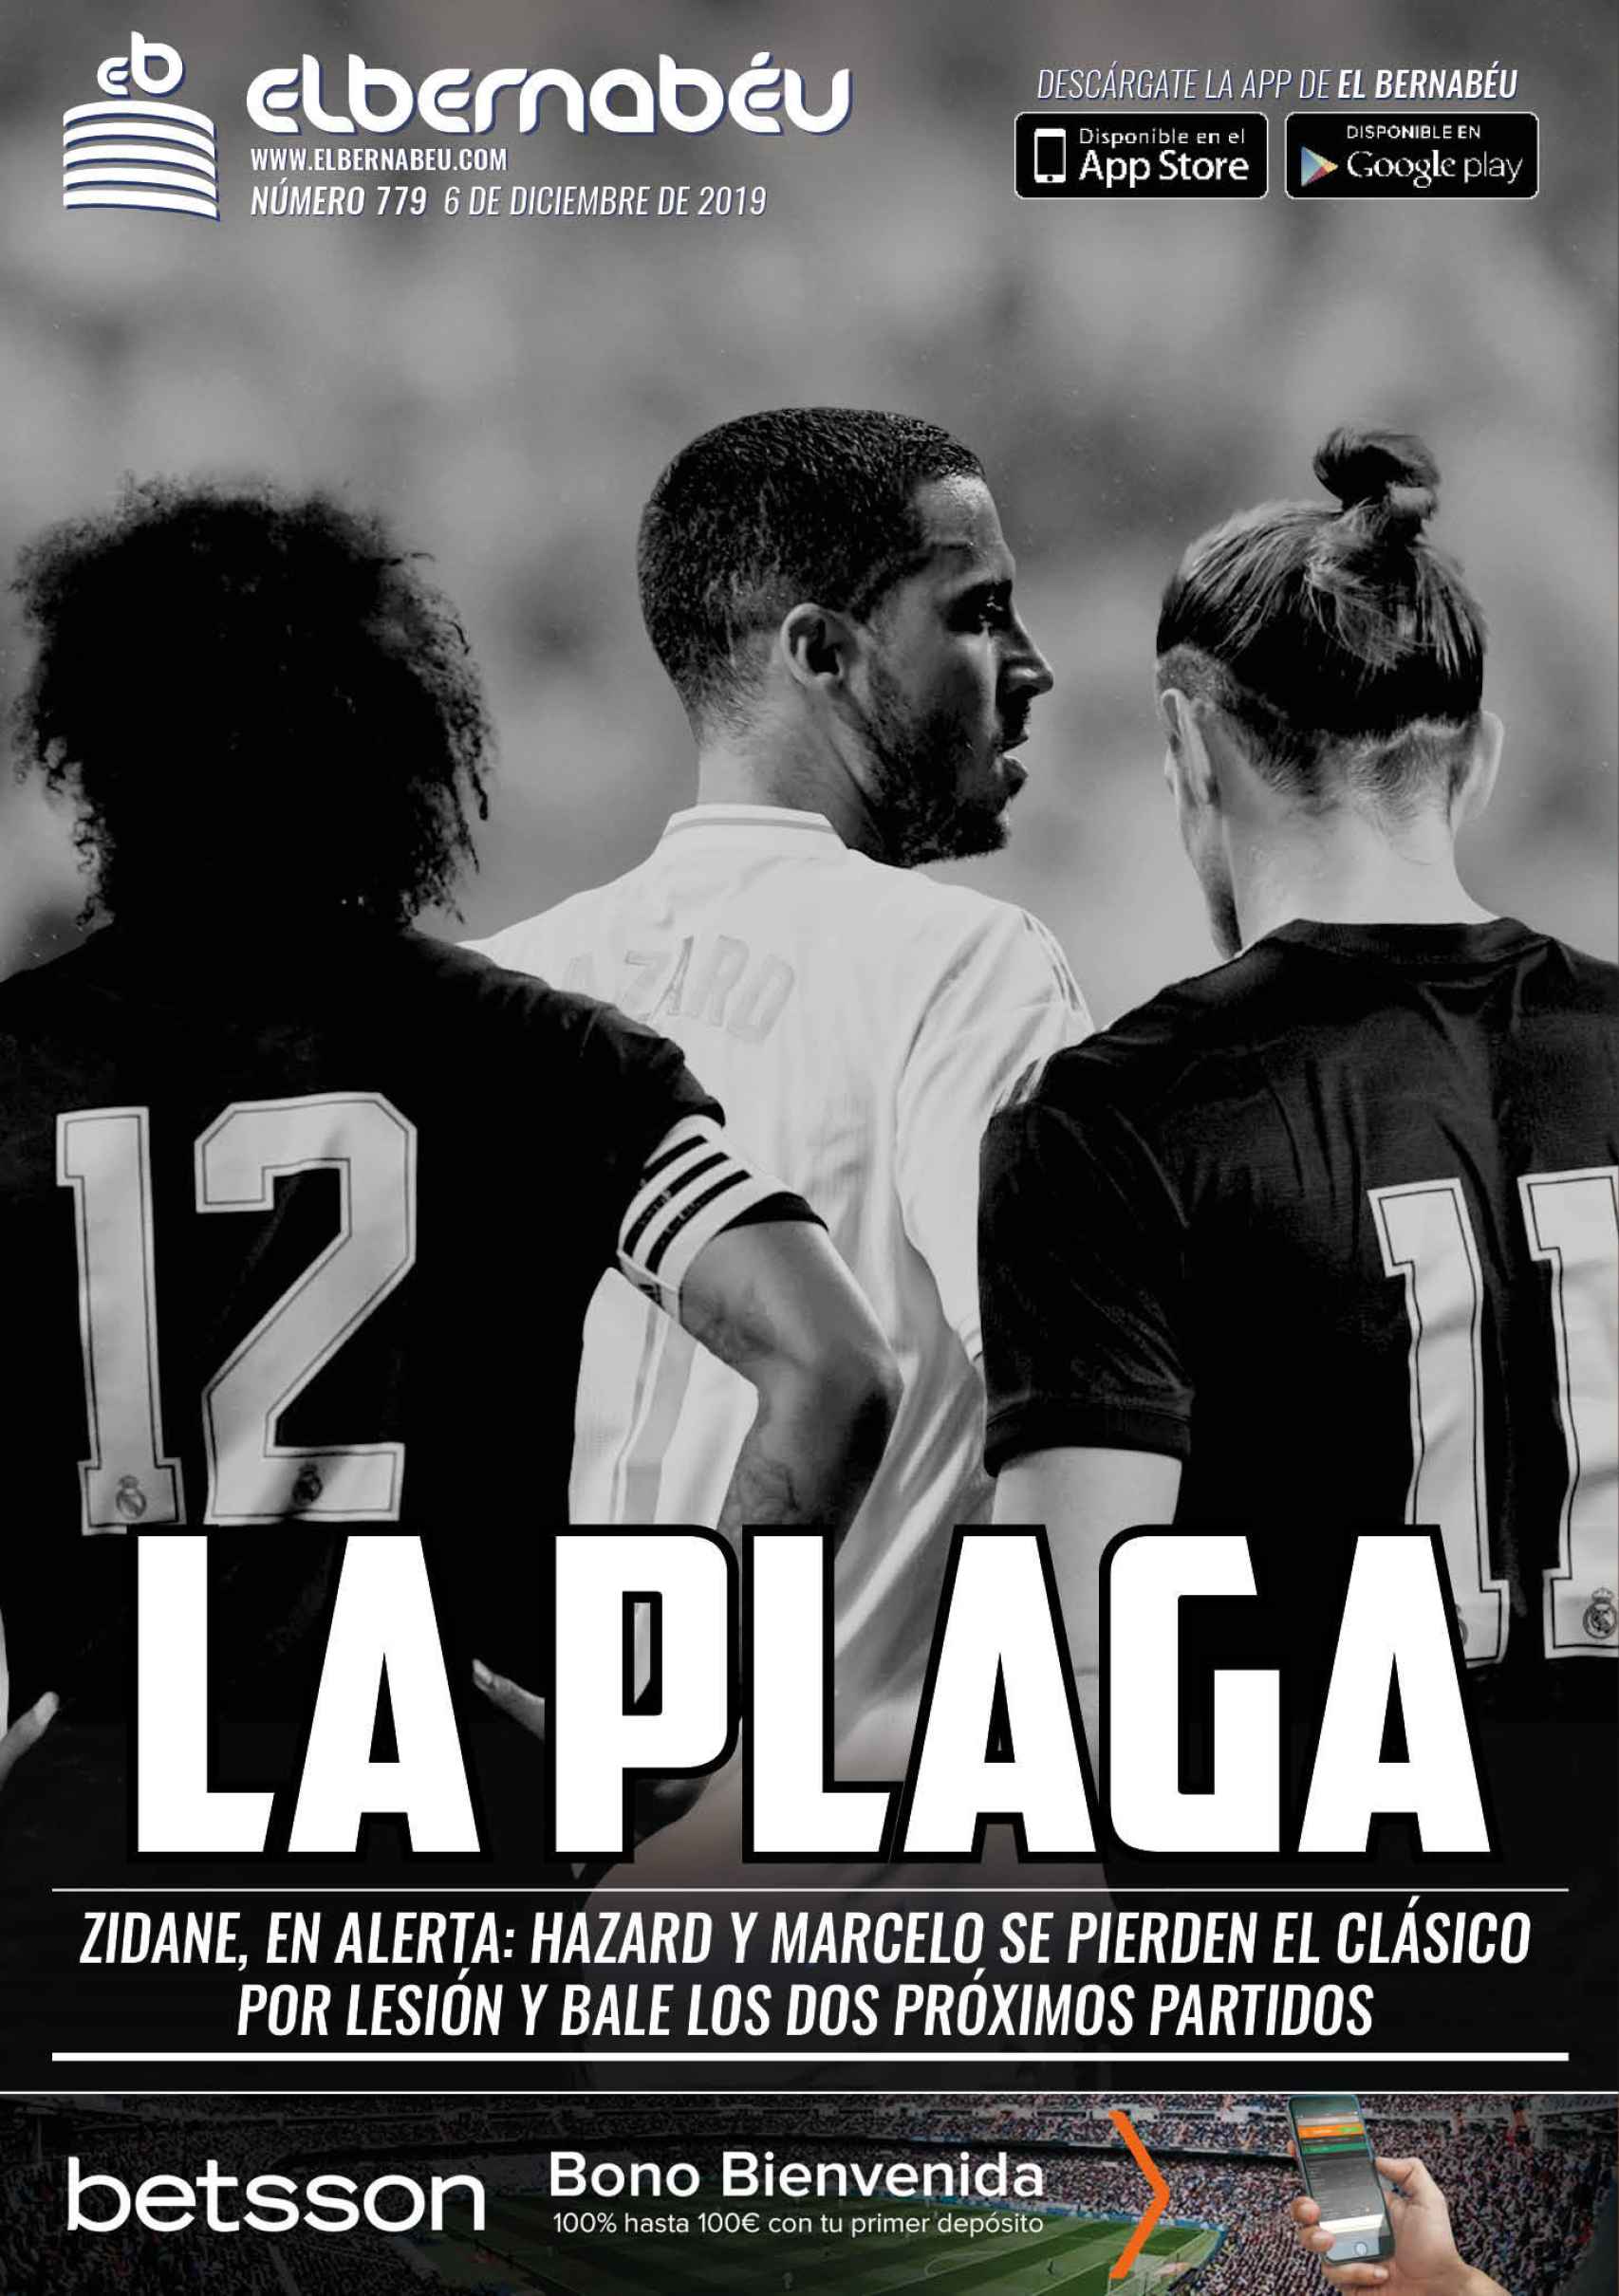 La portada de El Bernabéu (06/12/2019)